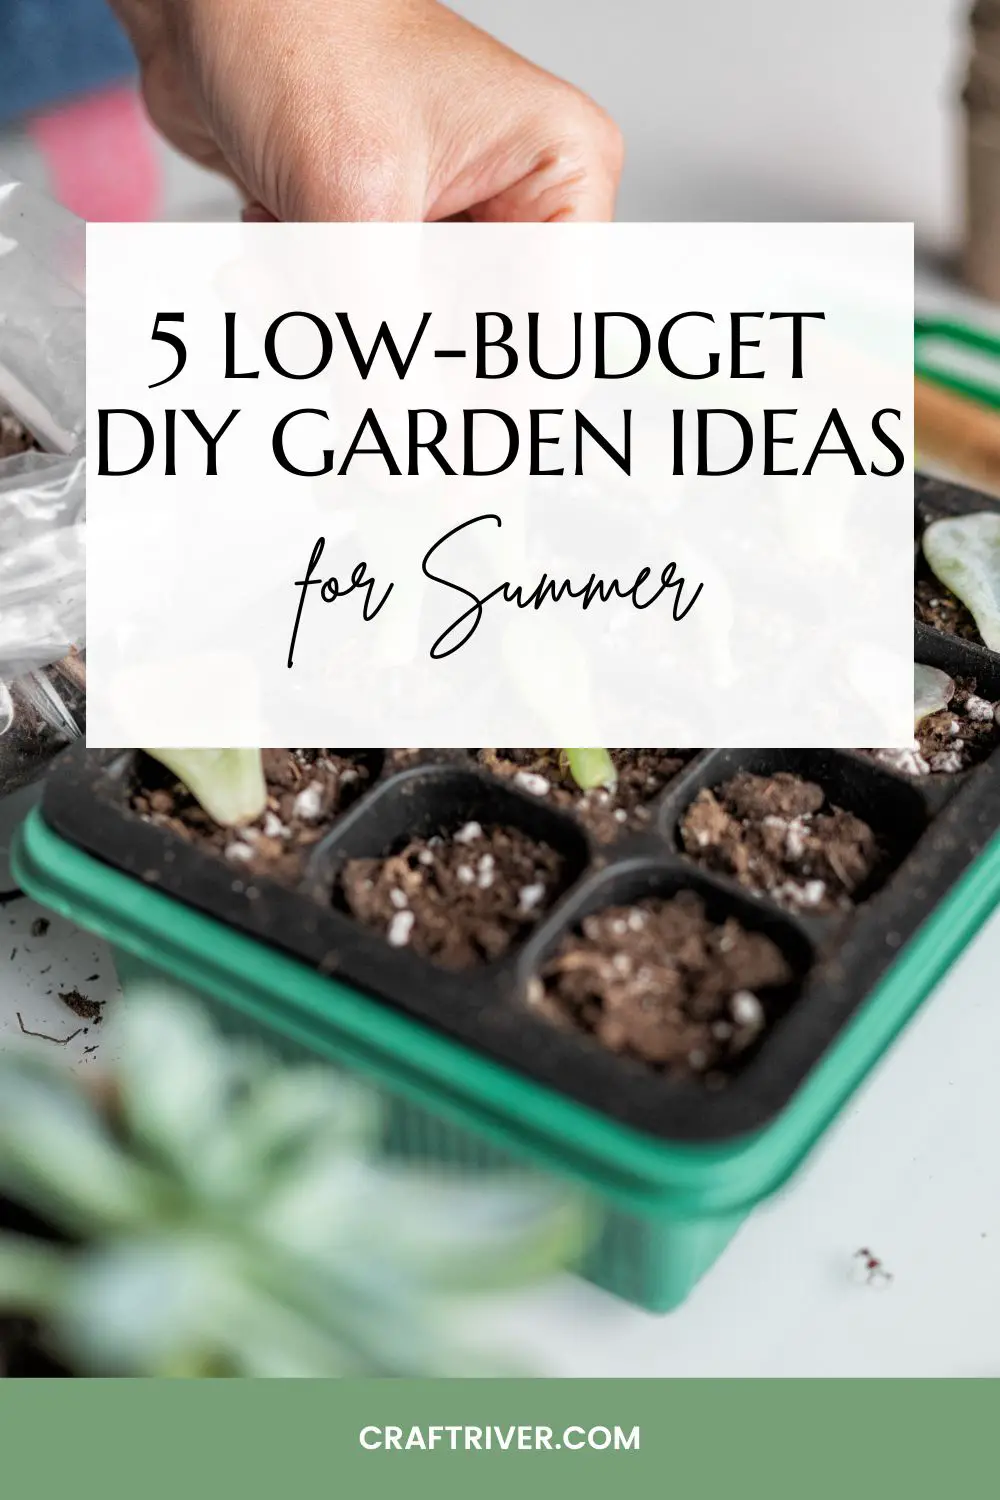 Low-Budget DIY Garden Ideas for Summer